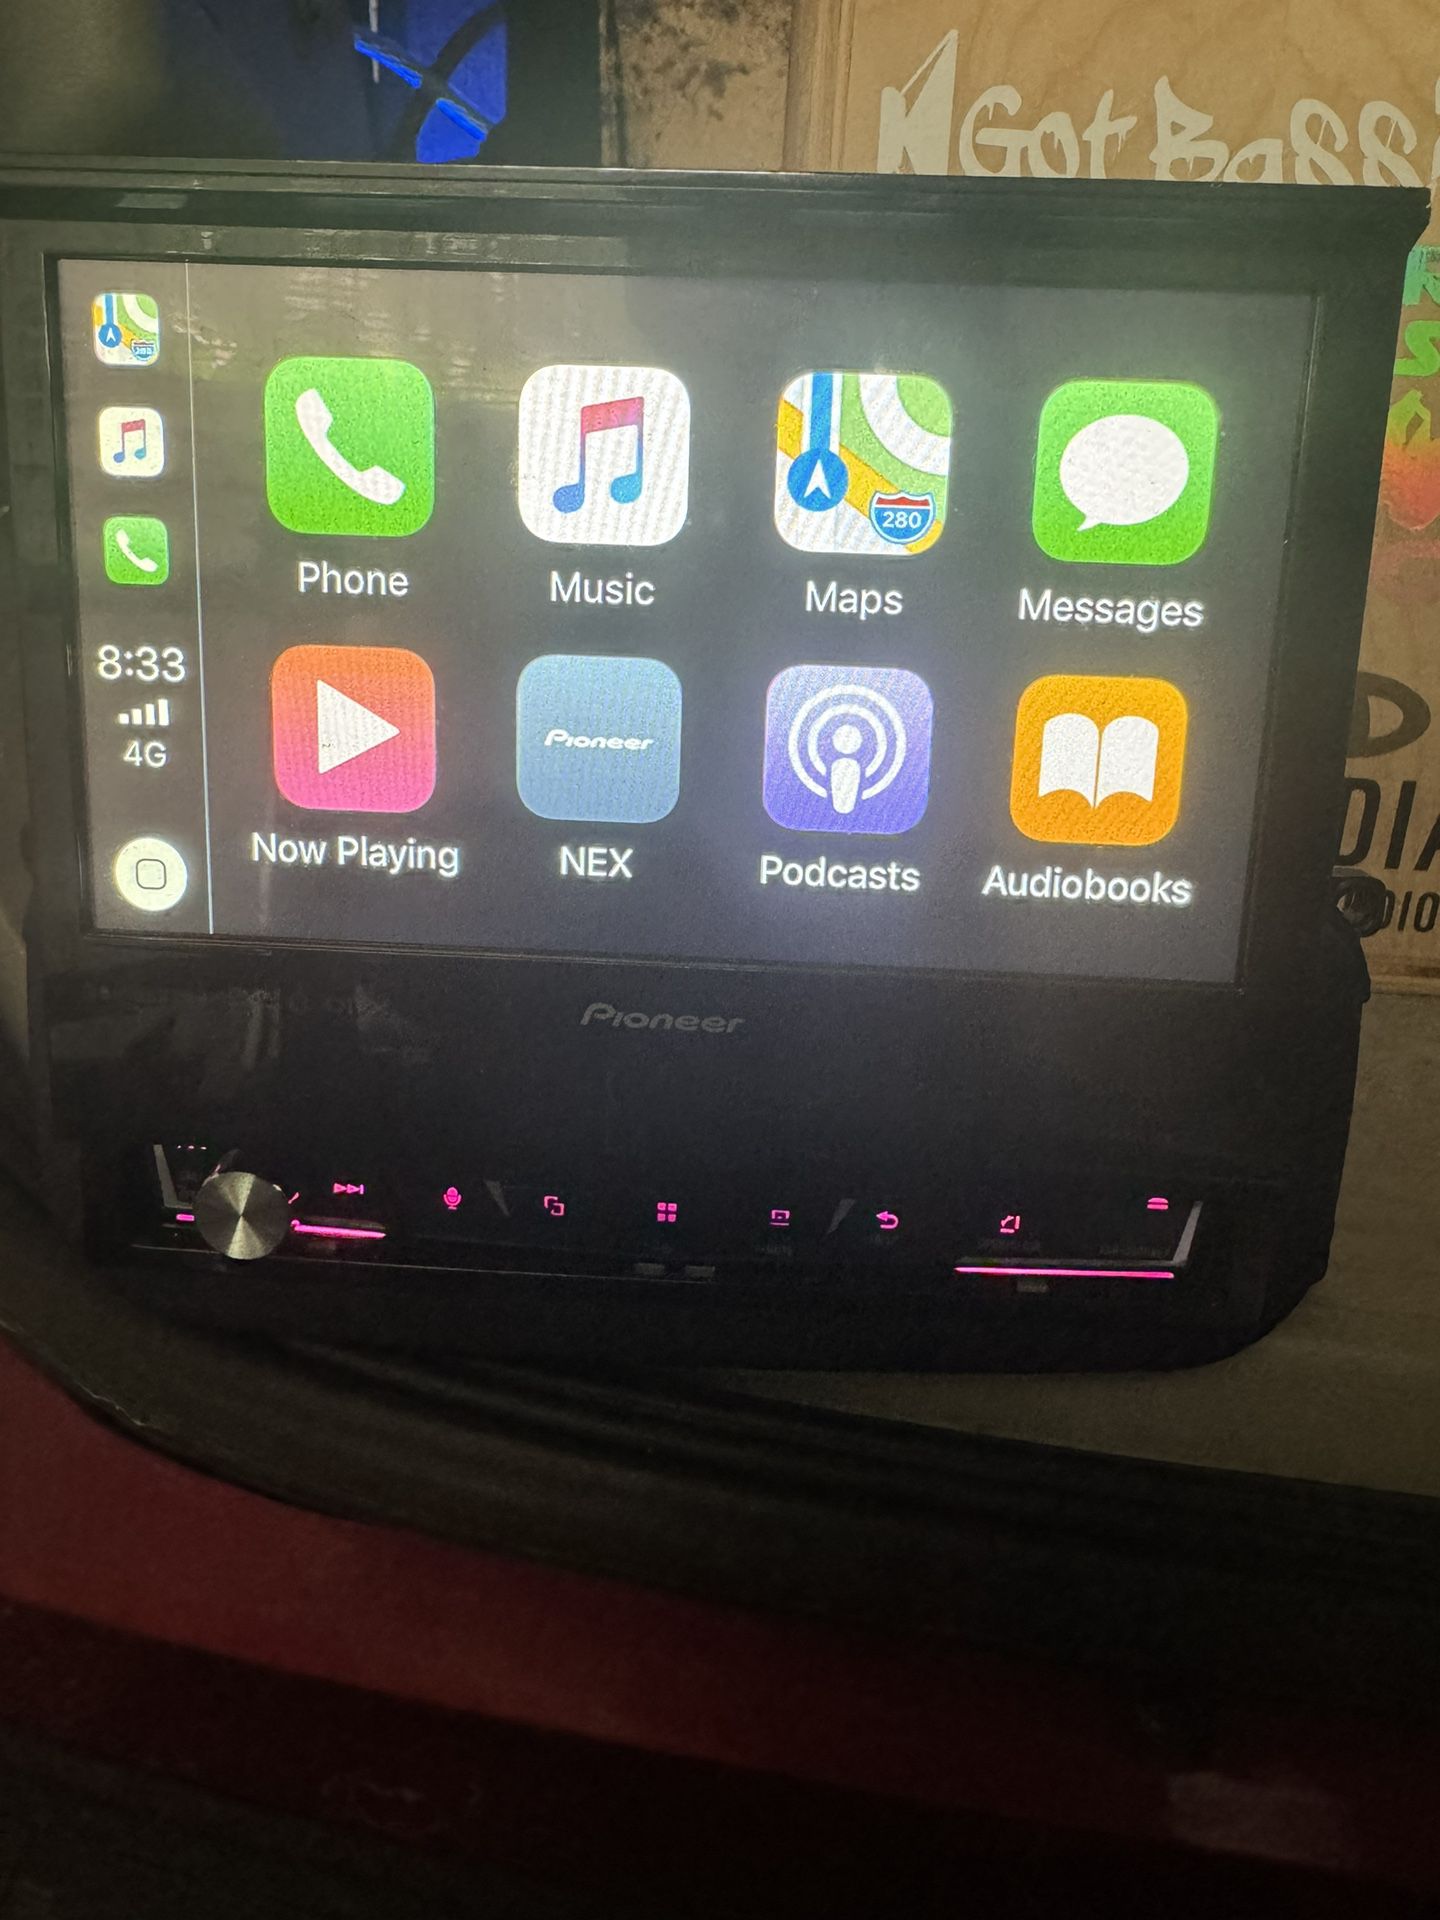 Pioneer AVH-3500NEX/B 1 DIN DVD/CD Player Flip Up Bluetooth Android Auto CarPlay